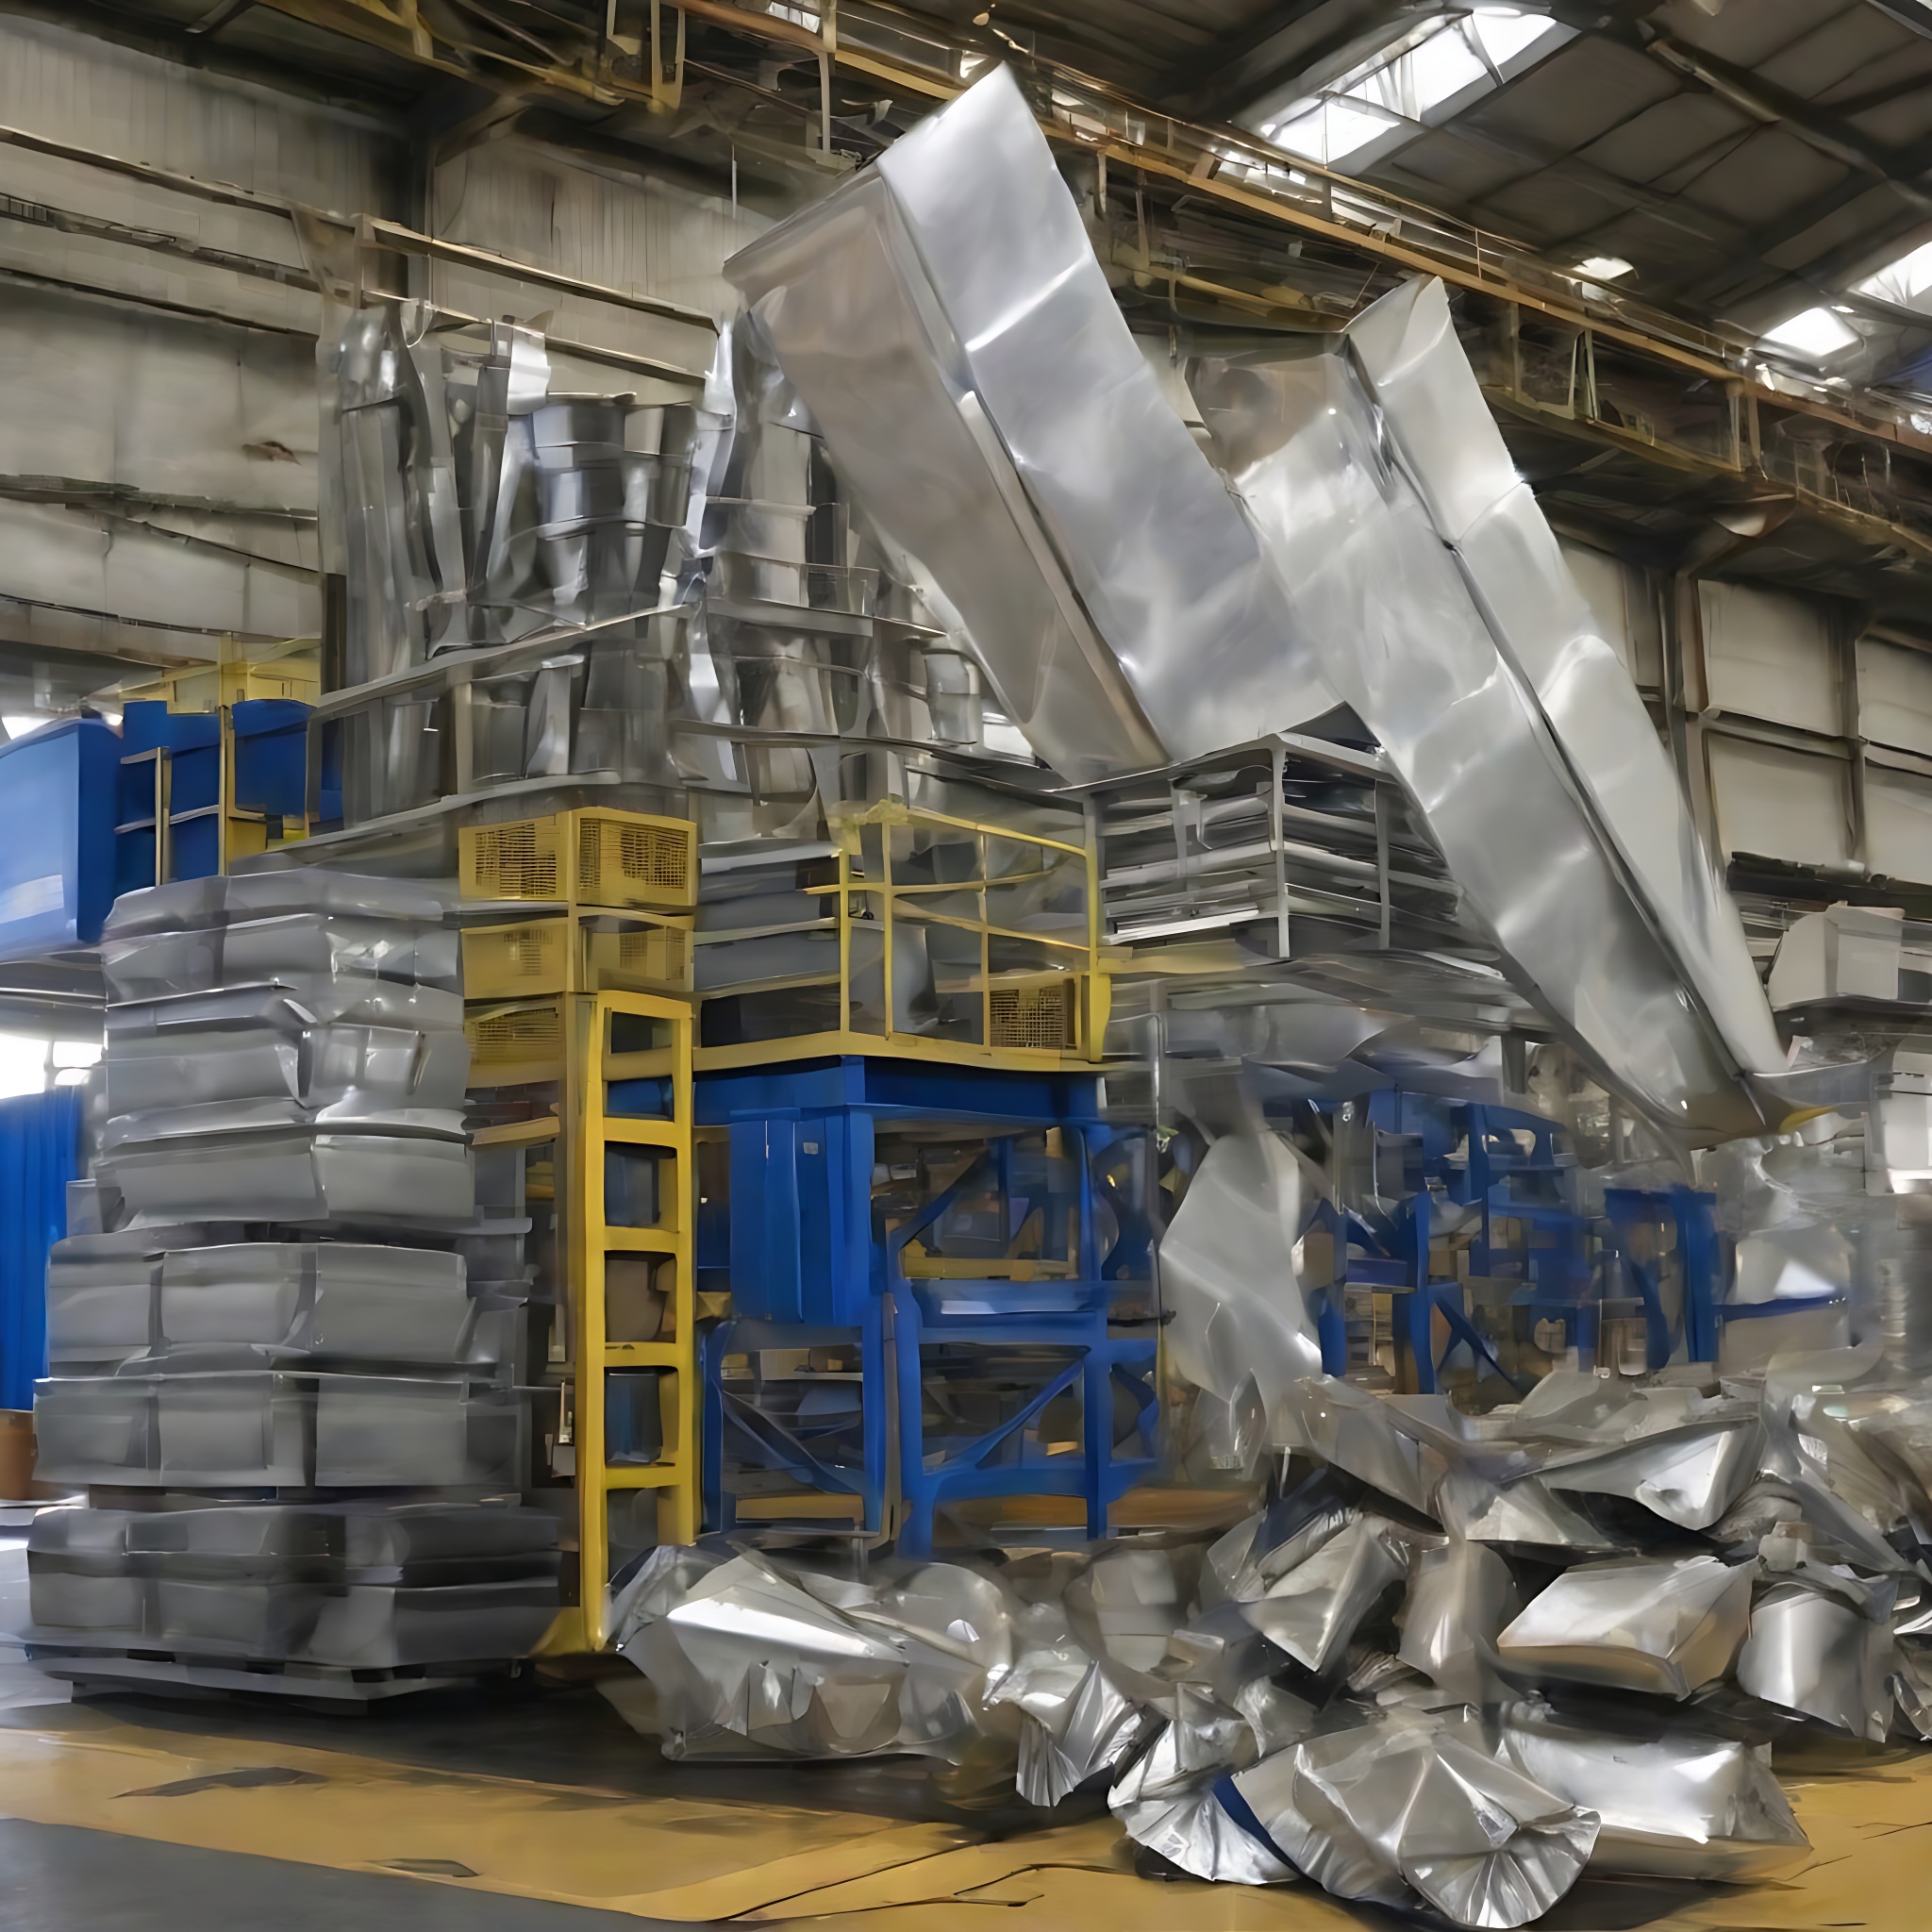 reuse of scrap aluminum reduces carbon dioxide emissions